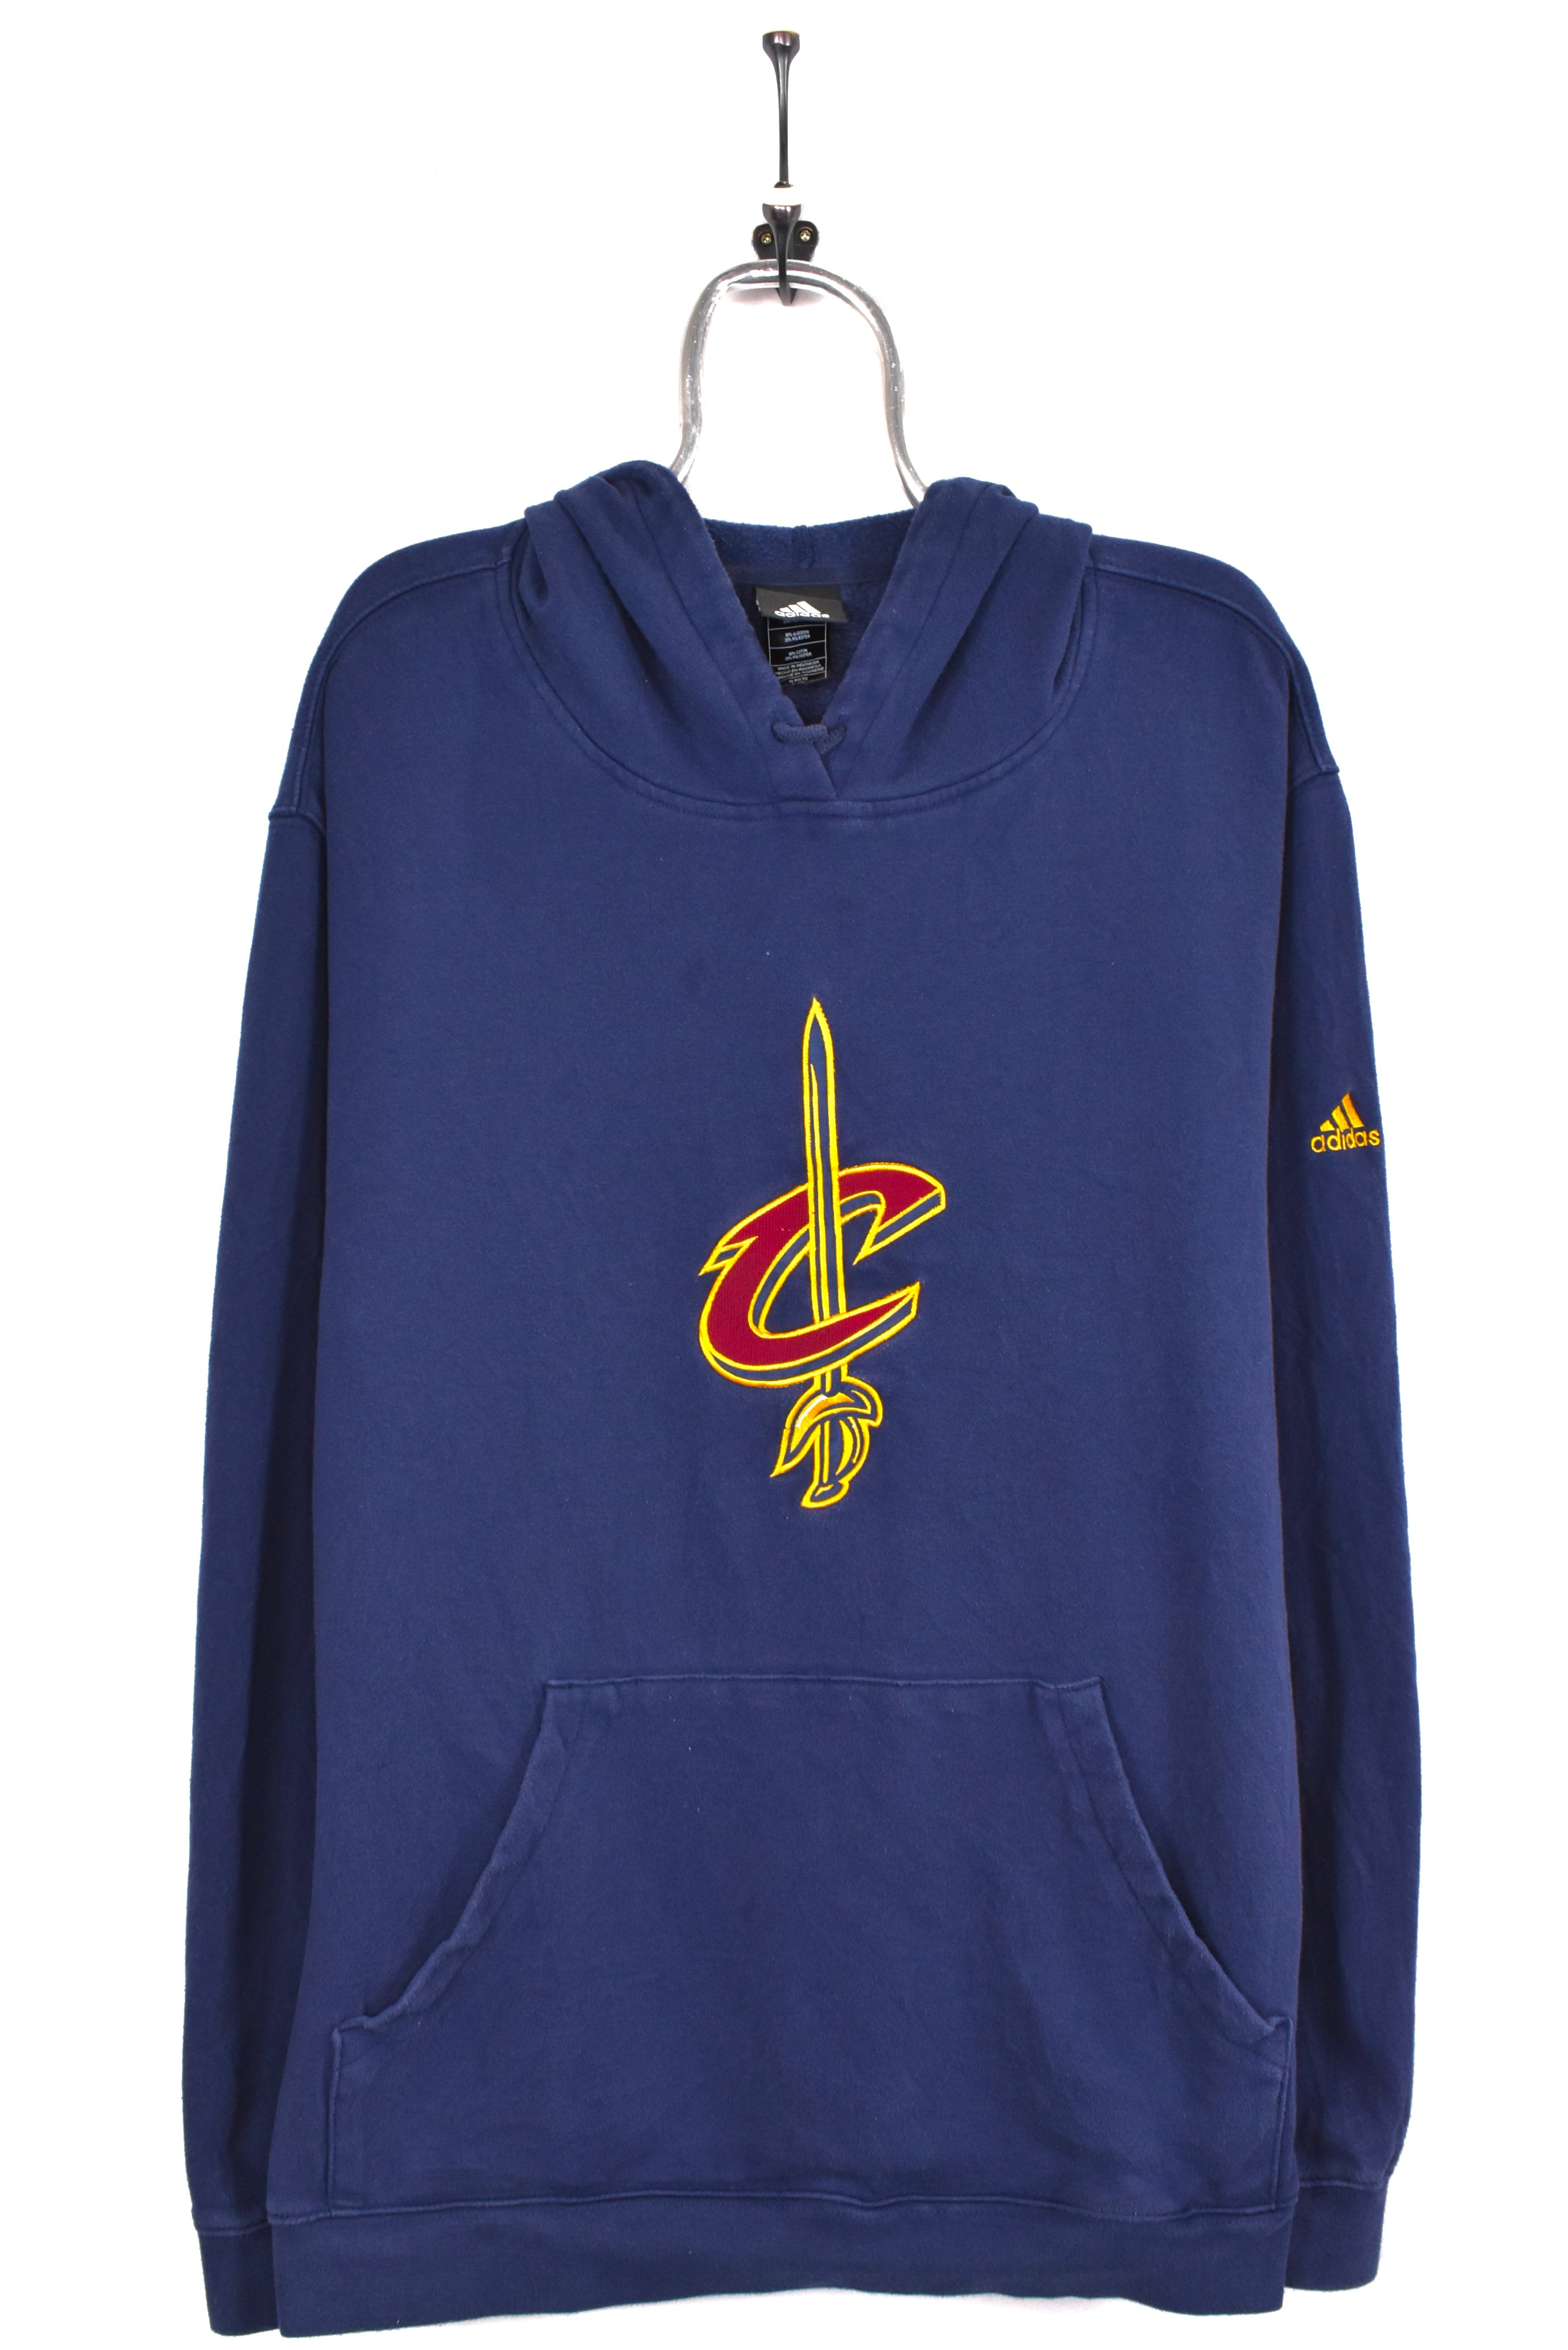 Vintage Cleveland Cavaliers hoodie, blue NBA embroidered sweatshirt - XL